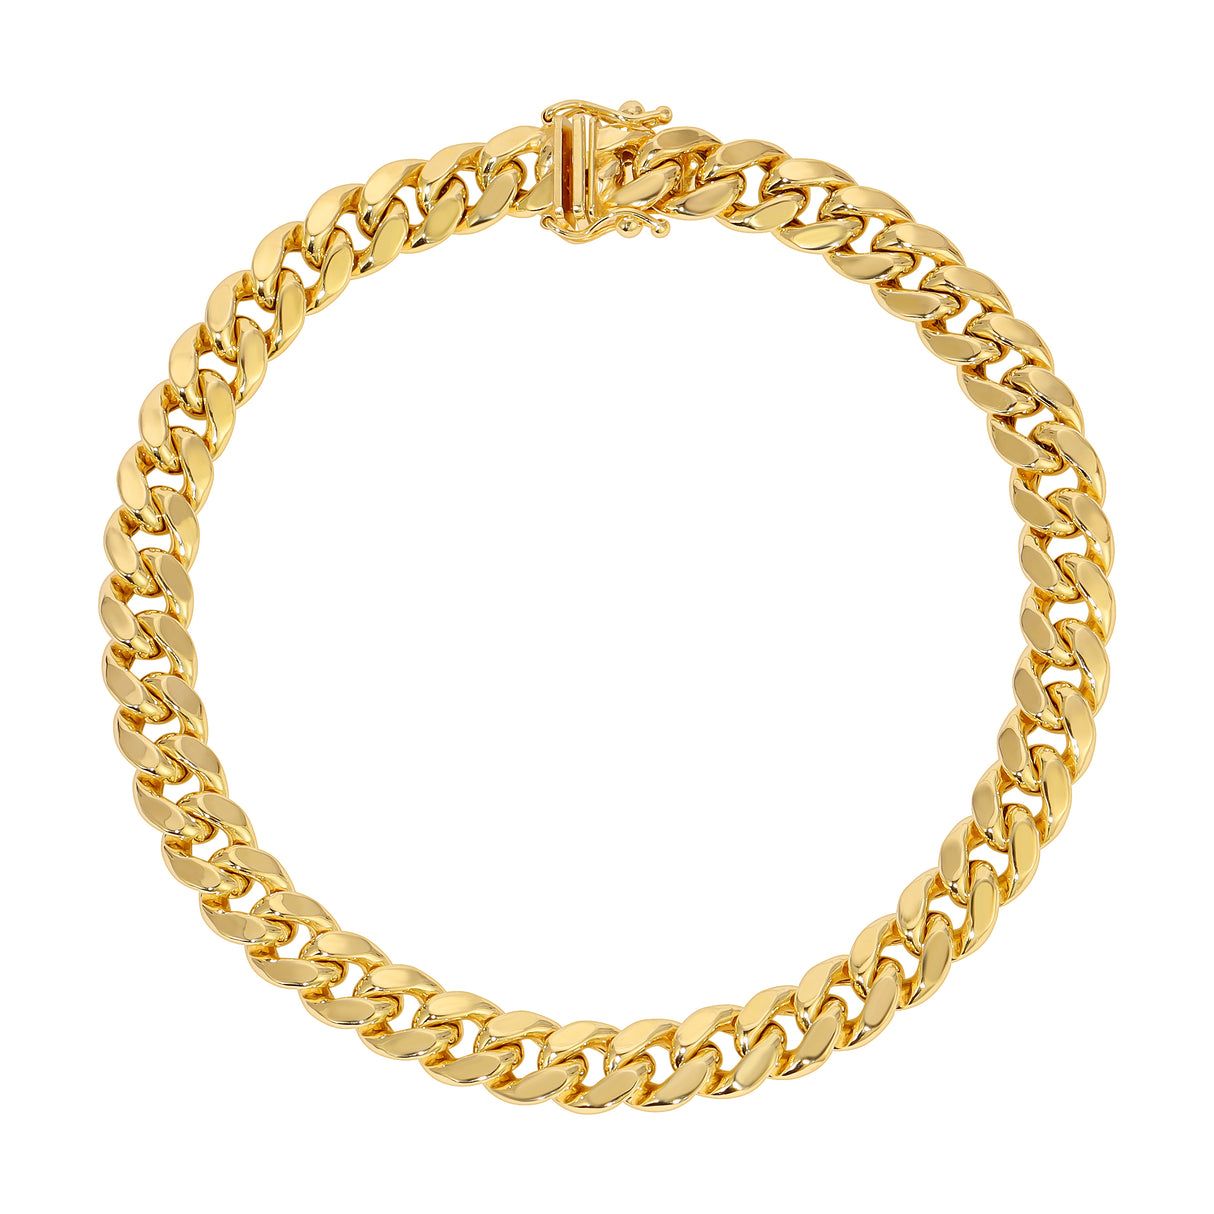 Hollow MIAMI CUBAN Bracelets | 10K Yellow Gold 4.00mm-11.00mm Jewelry | Italian Fashions 